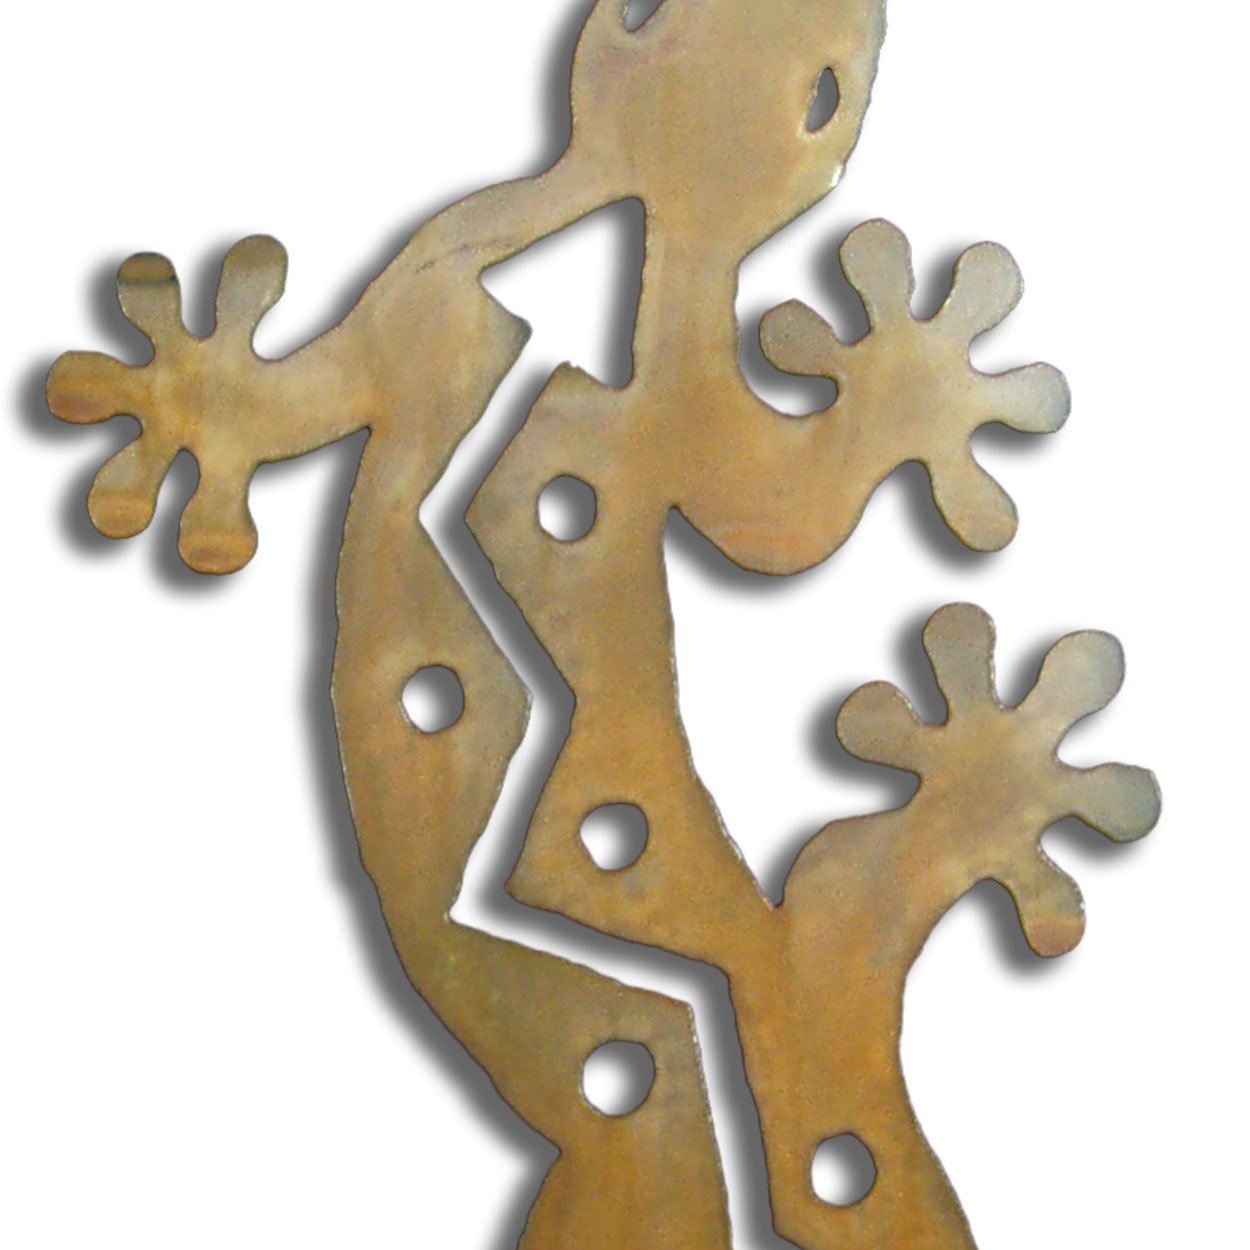 165182 - 18-inch medium S-Shaped Gecko 3D Metal Wall Art in a rich rust finish